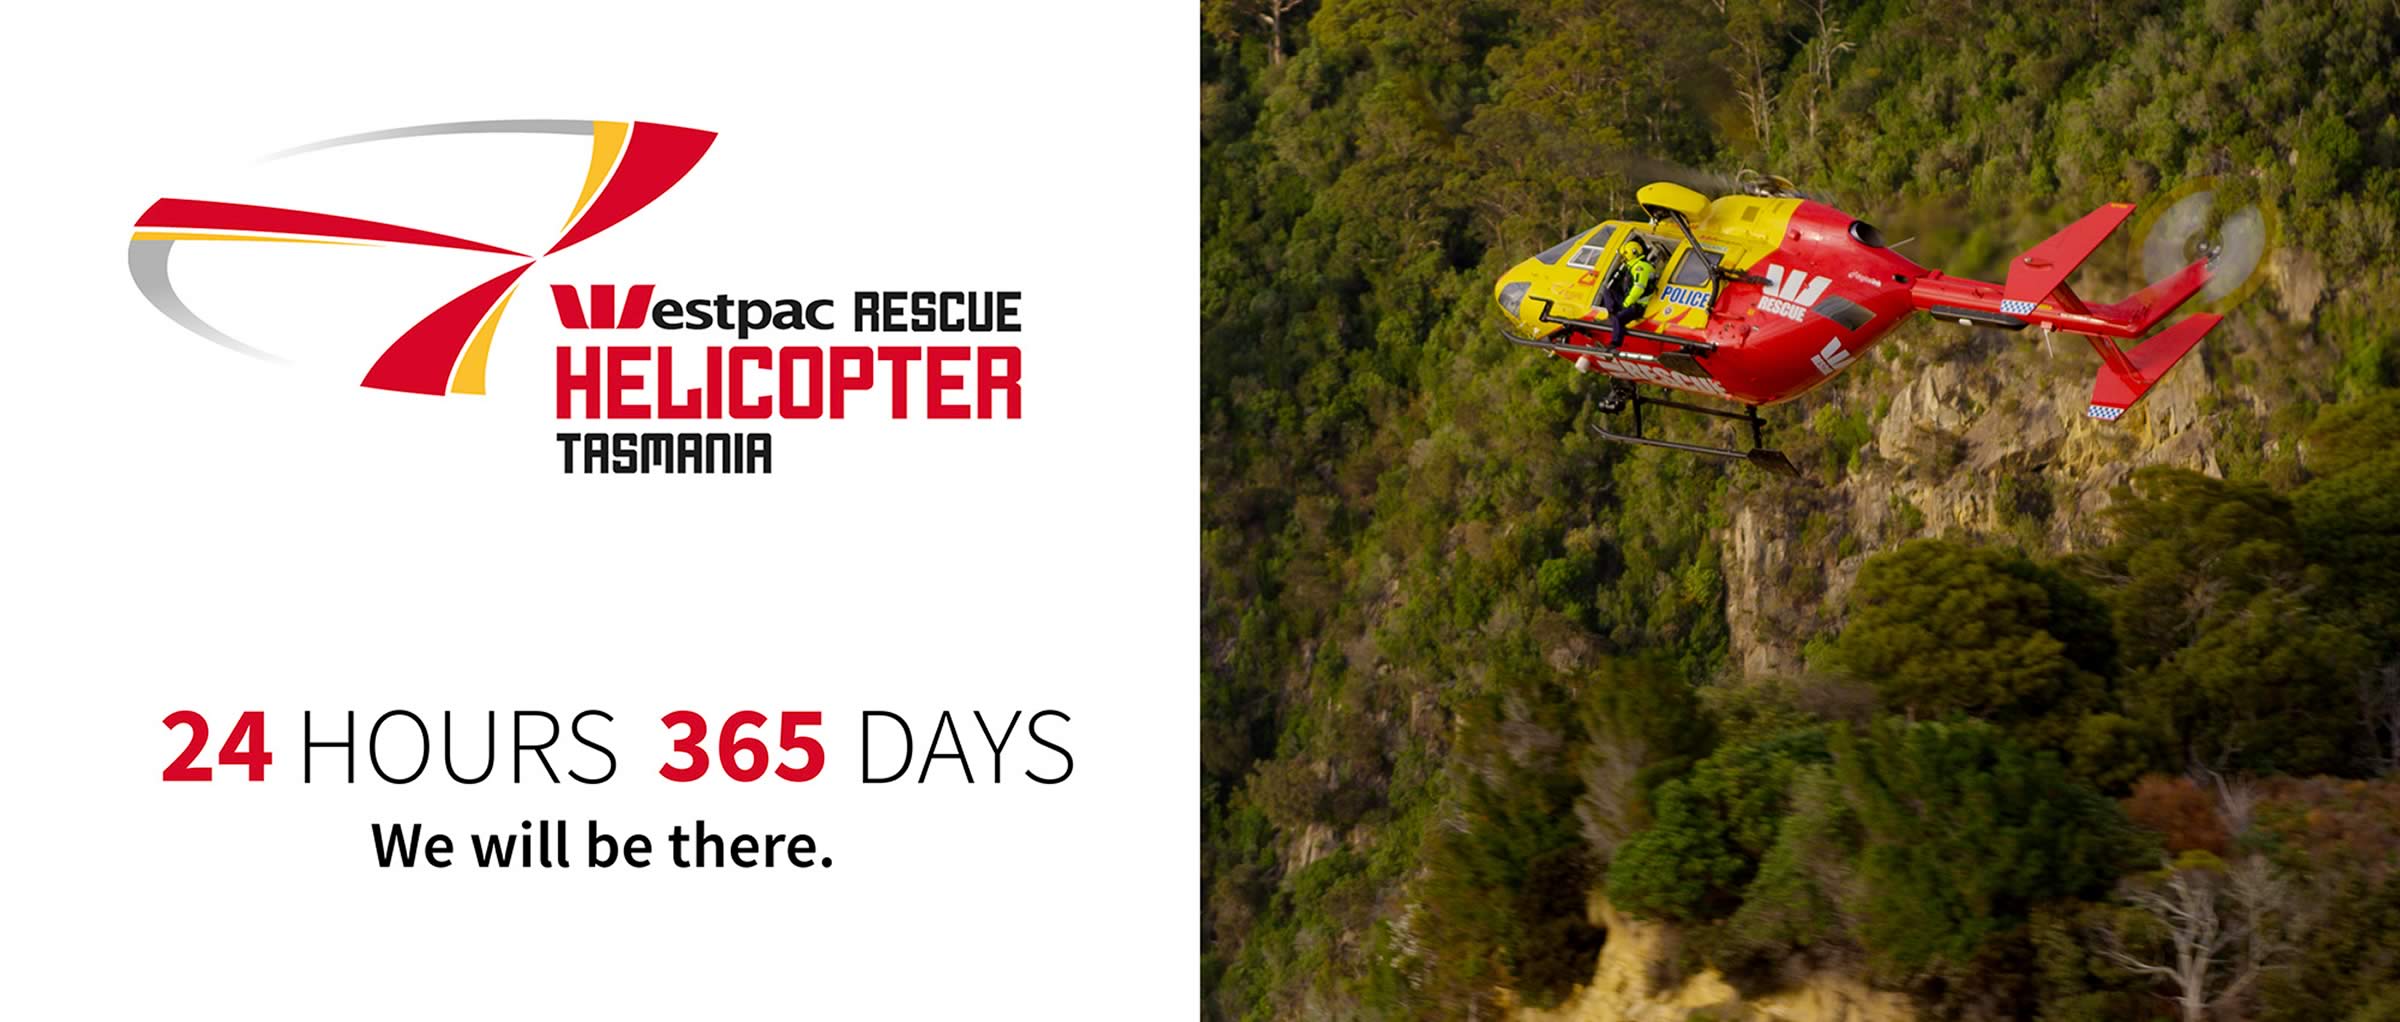 Westpac Rescue Helicopter Tasmania